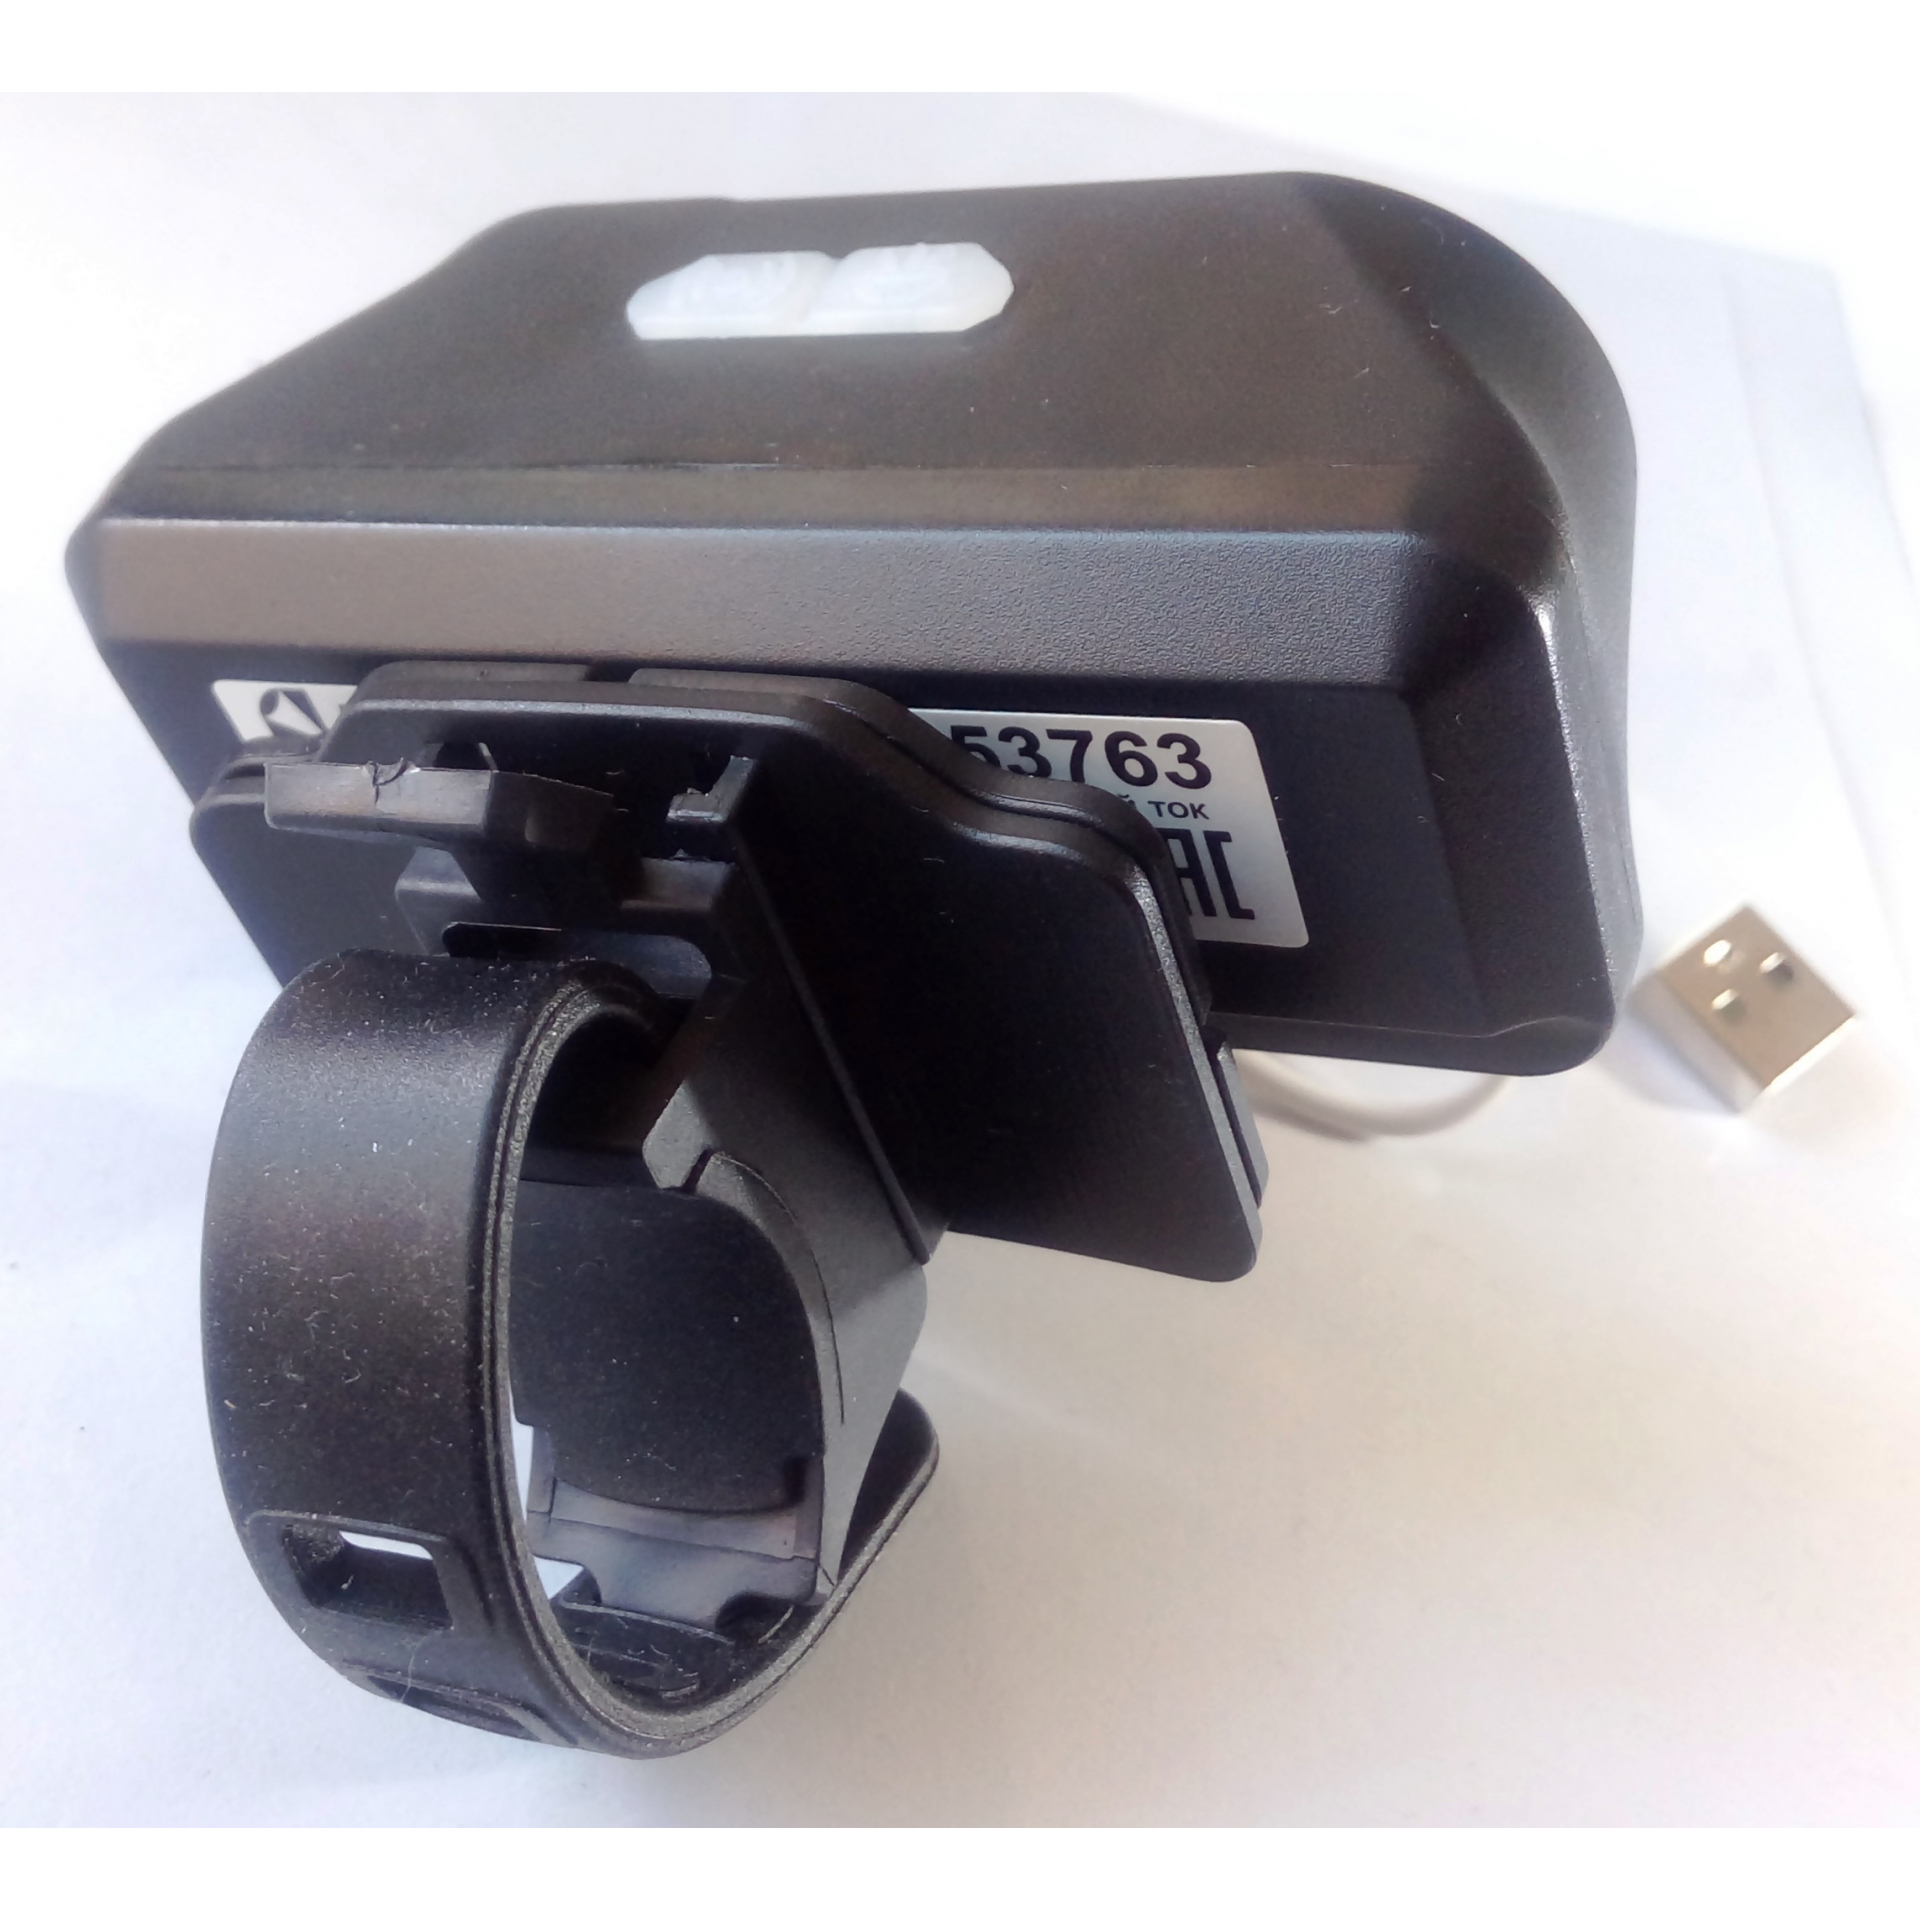 Ultraflash LED53763 (фонарь налоб.аккум 3,7В, черный, XPE + COB LED, 3+3 Ватт, 1 реж., крепл., бокс)